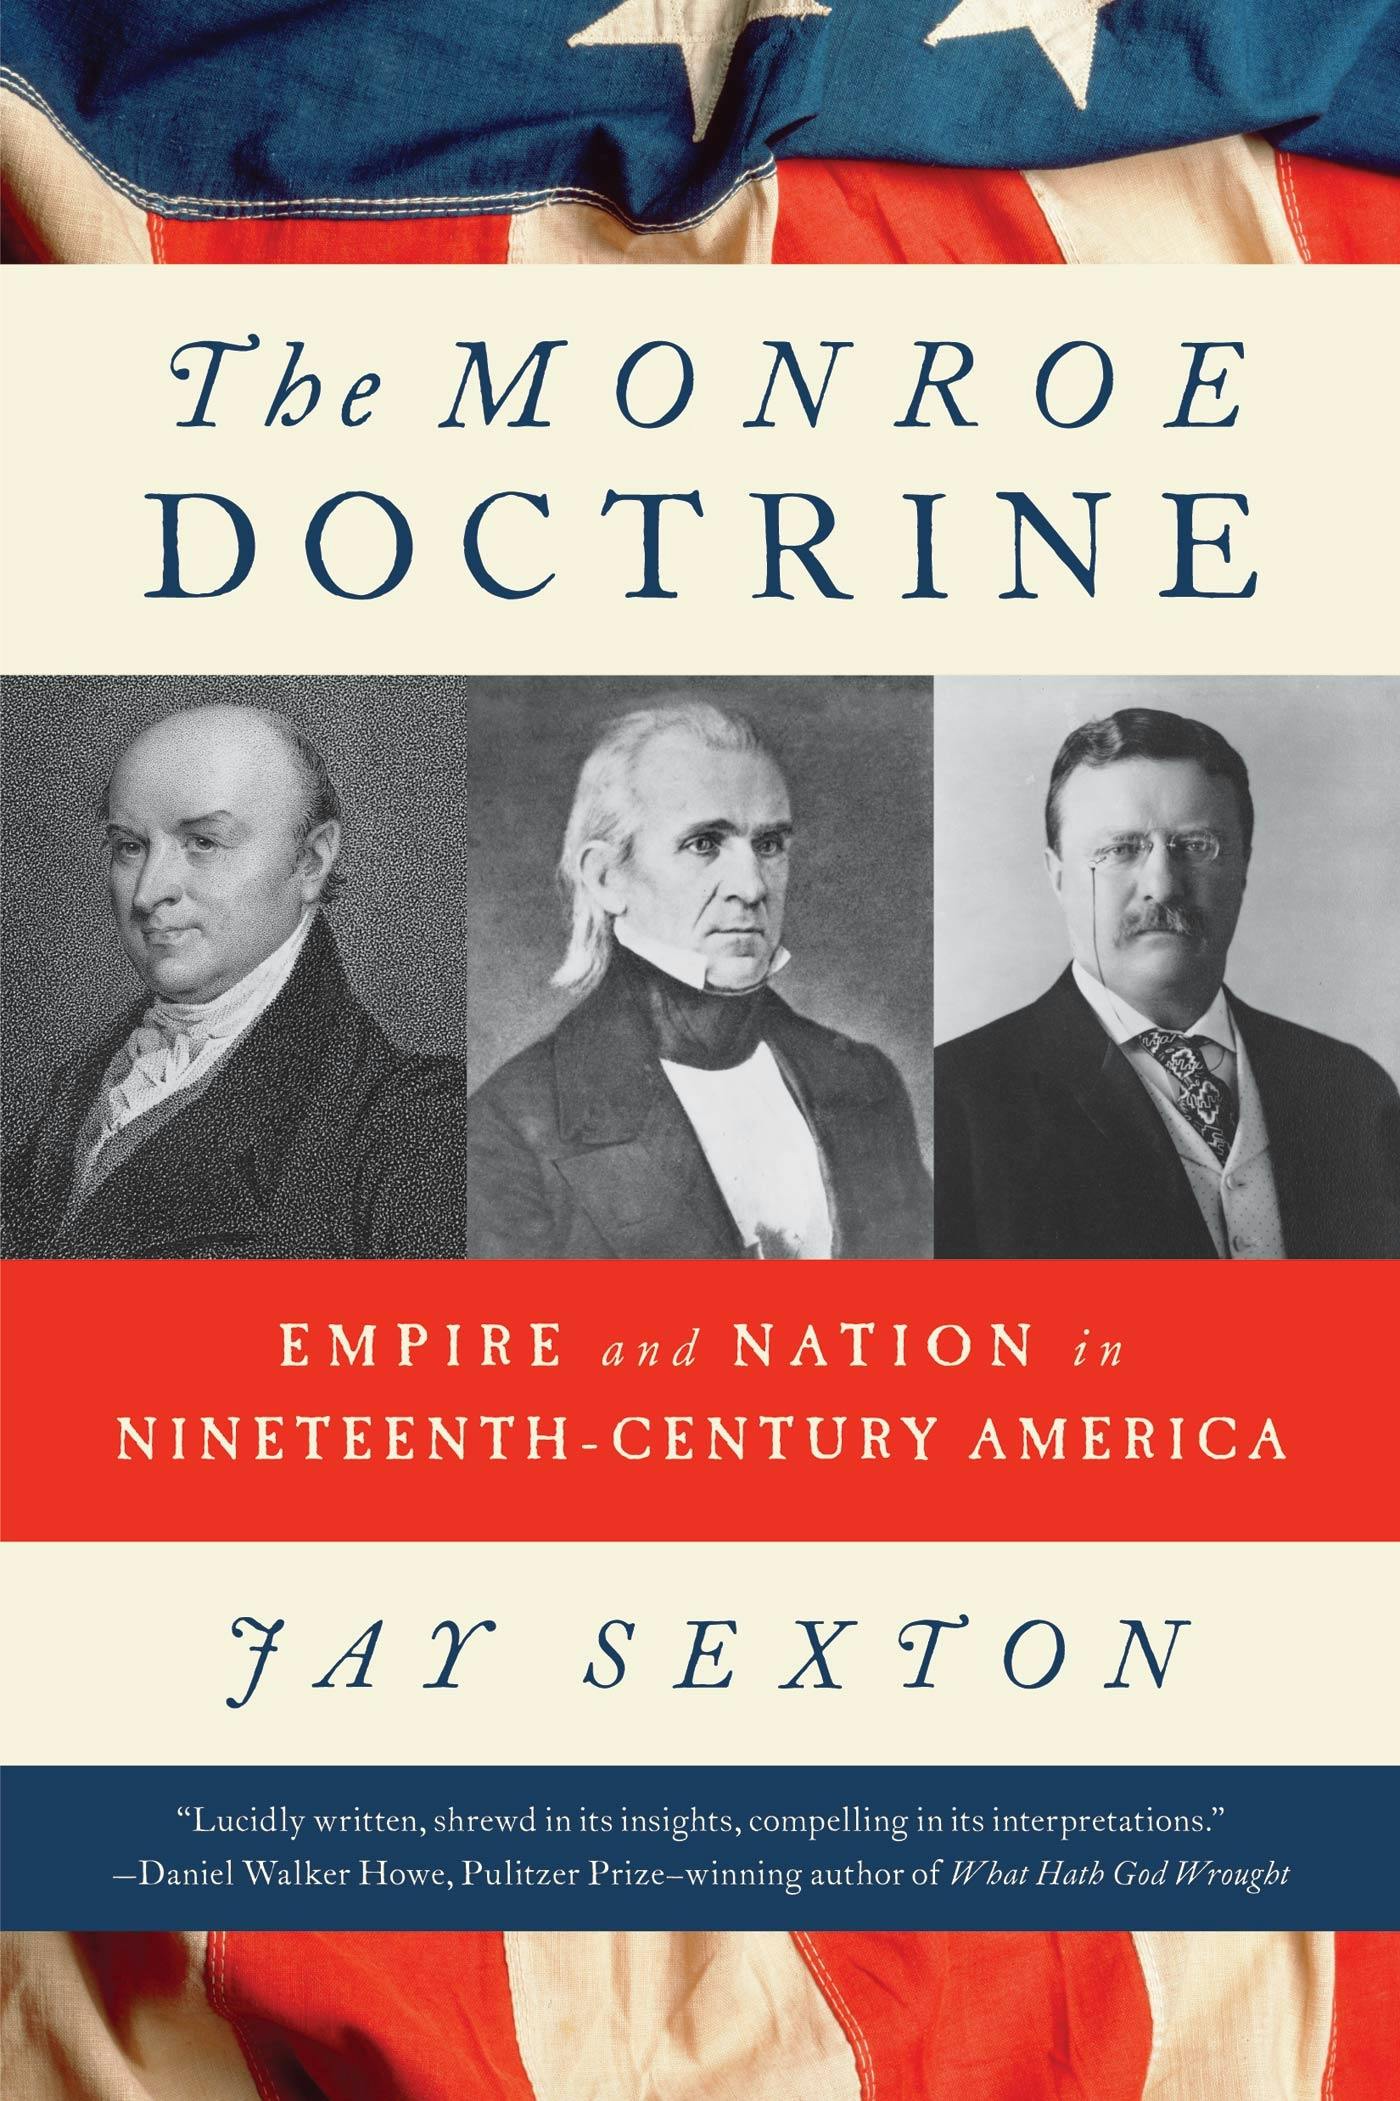 The Monroe Doctrine photo image